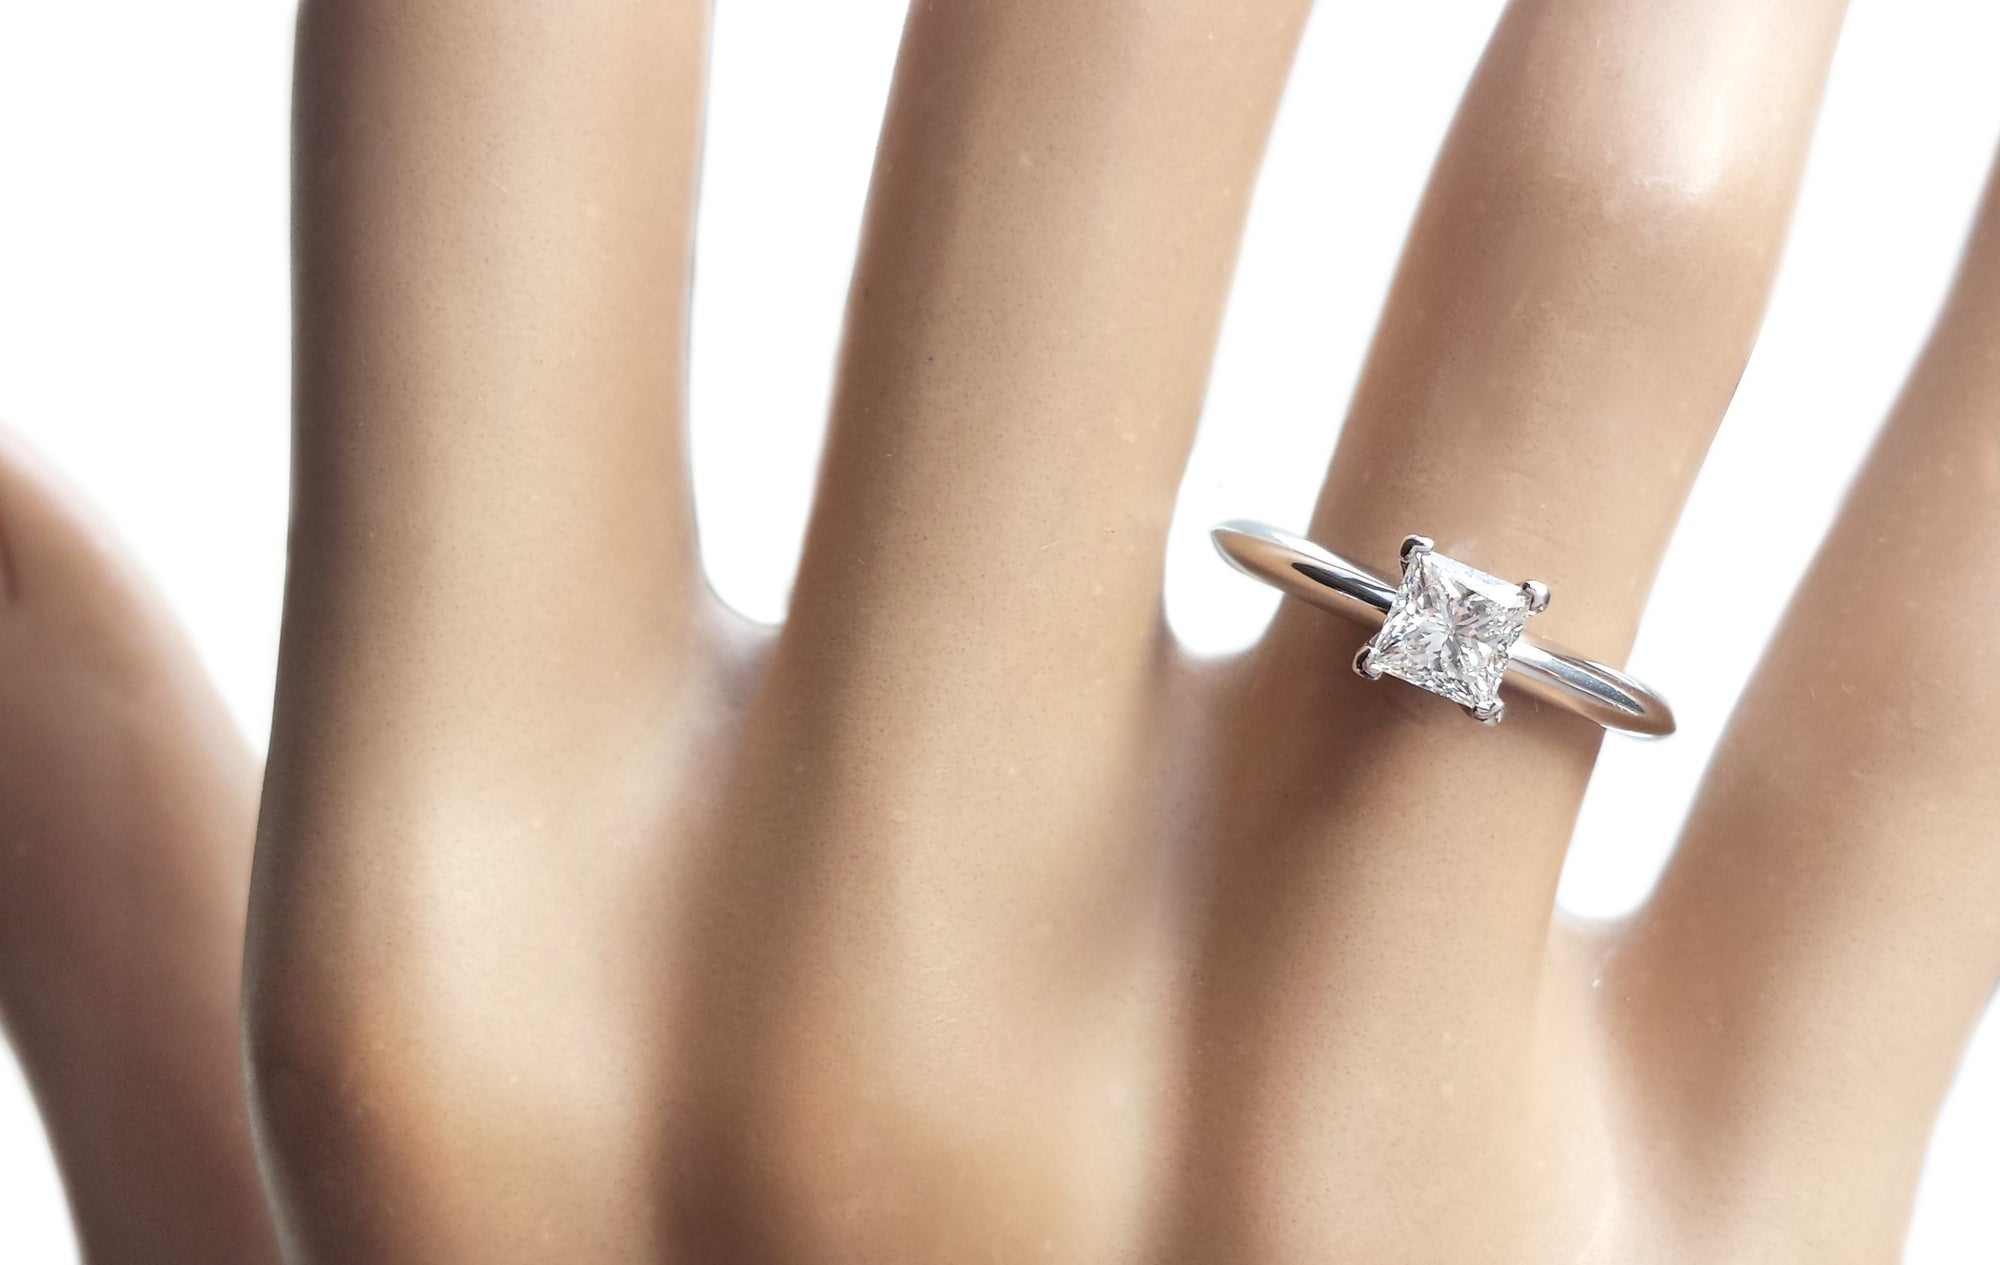 Tiffany & Co. 0.45ct E/VS1 Princess Cut Diamond Engagement Ring on model's finger